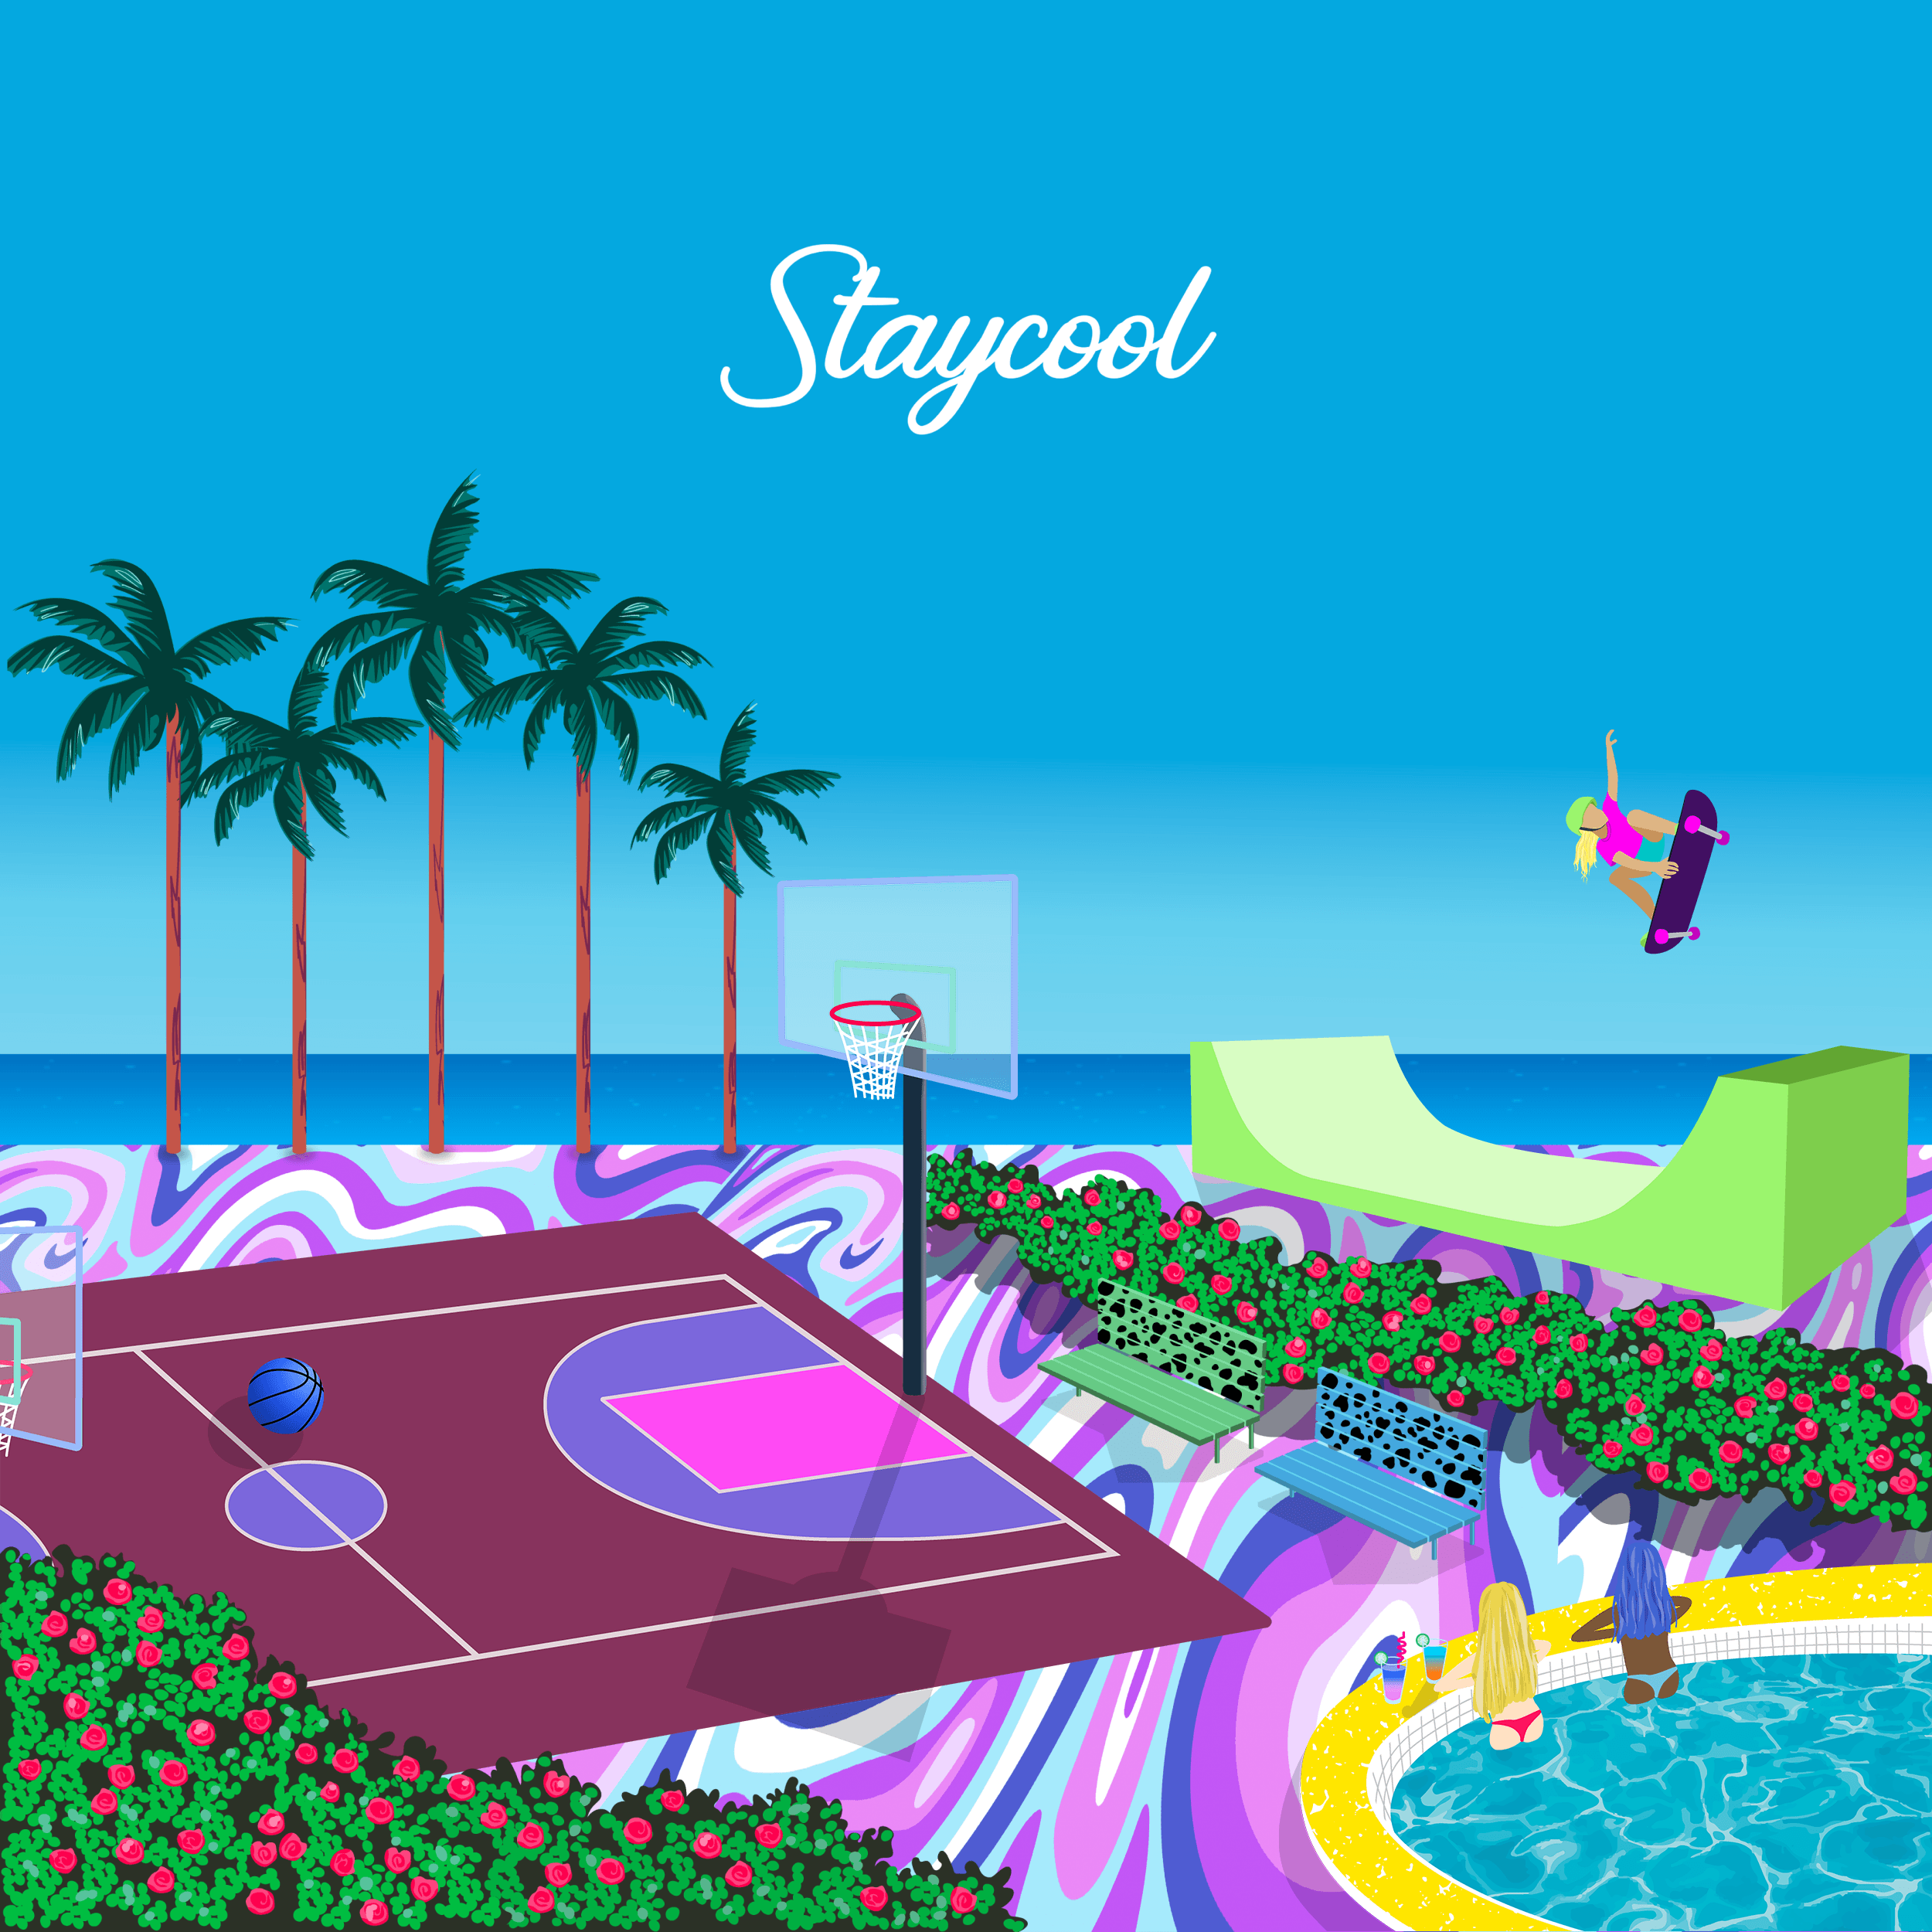 Staycool World #336